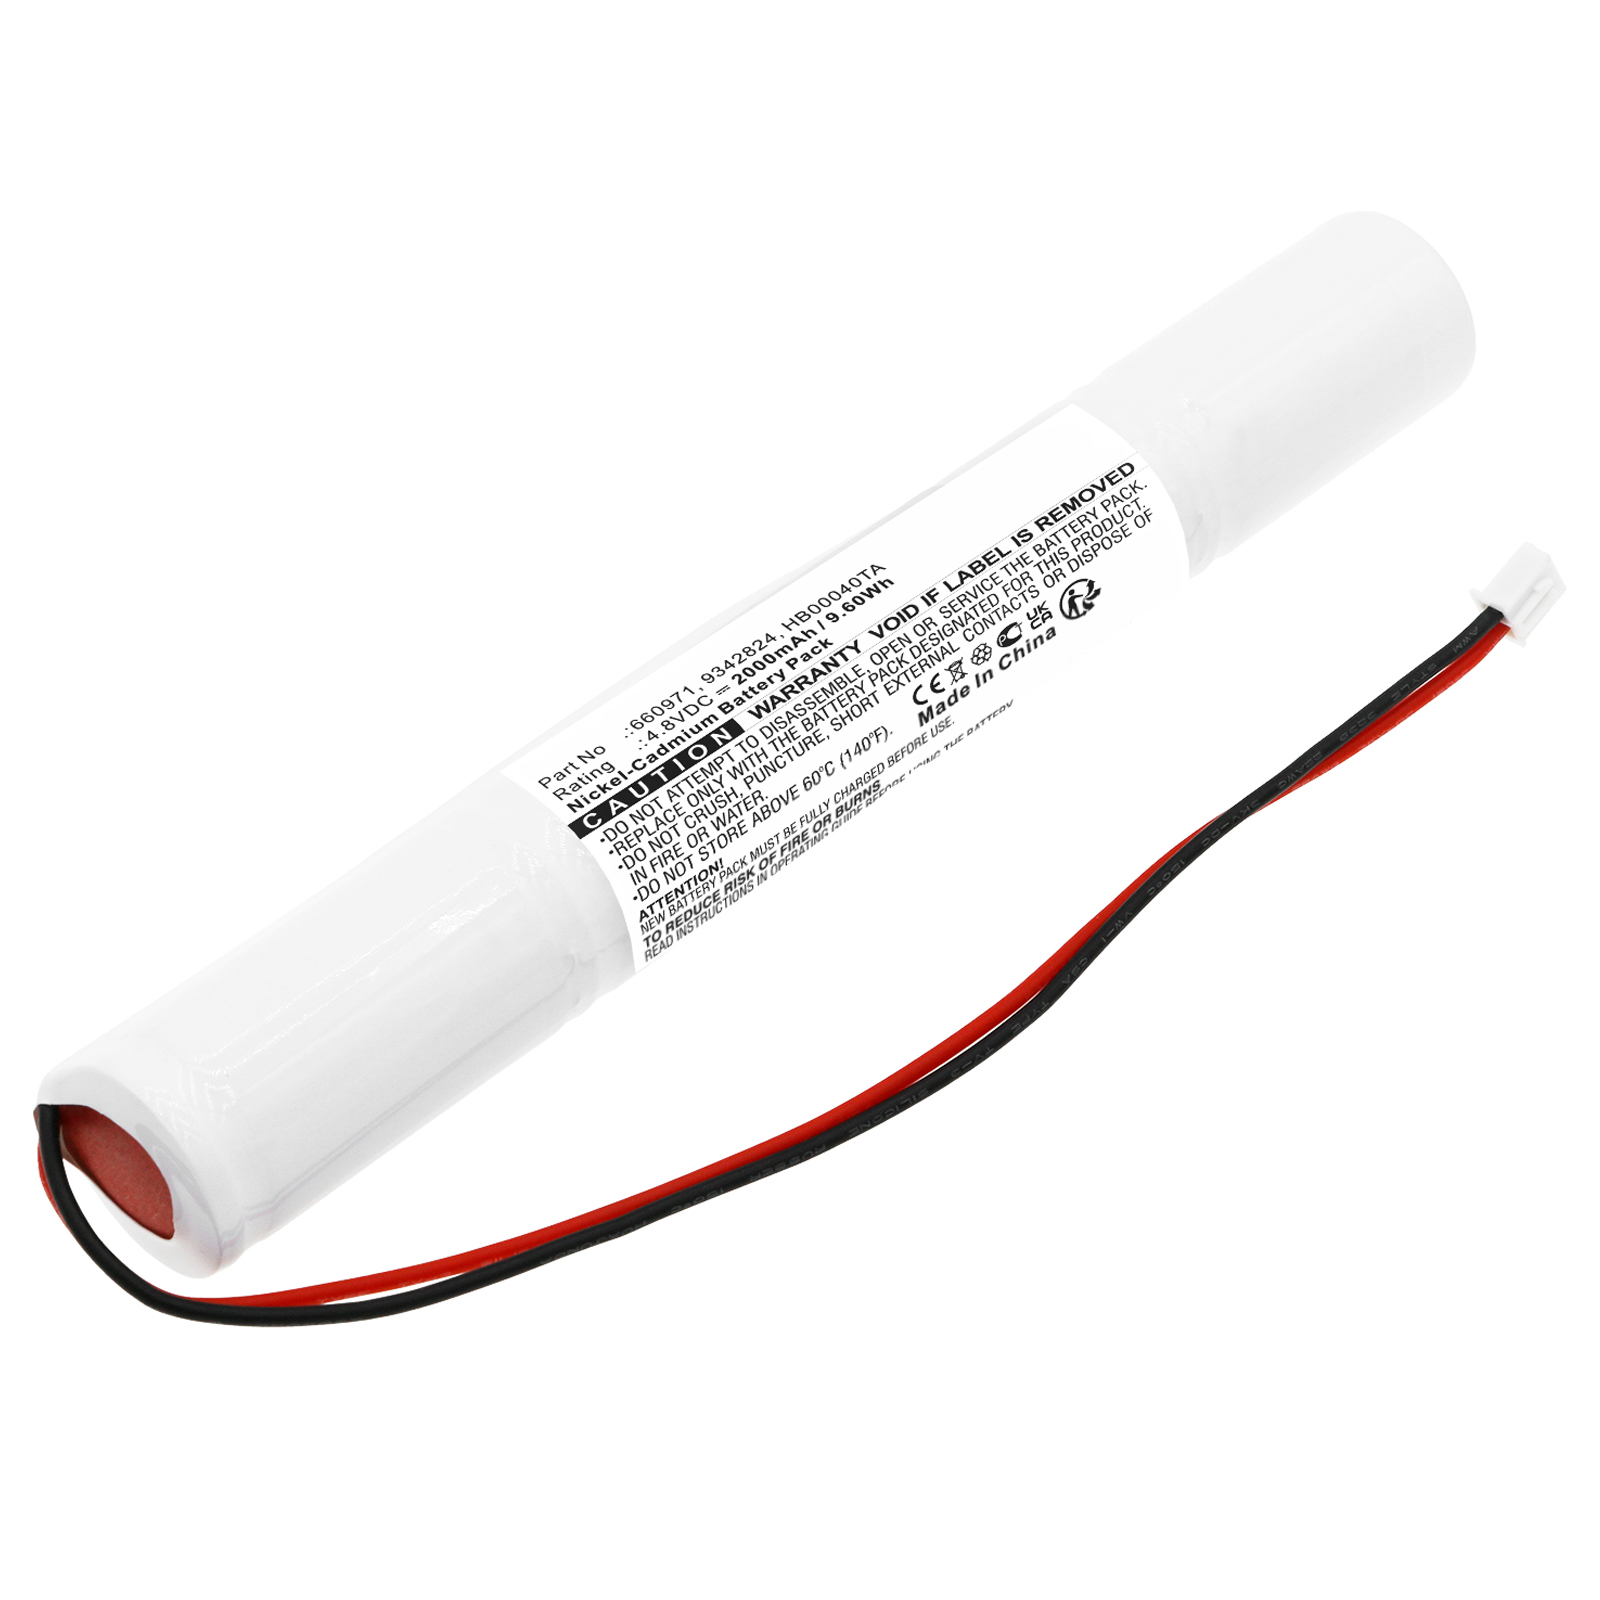 Synergy Digital Emergency Lighting Battery Compatible with Legrand HB00040TA Emergency Lighting Battery (Ni-CD, 4.8V, 2000mAh)